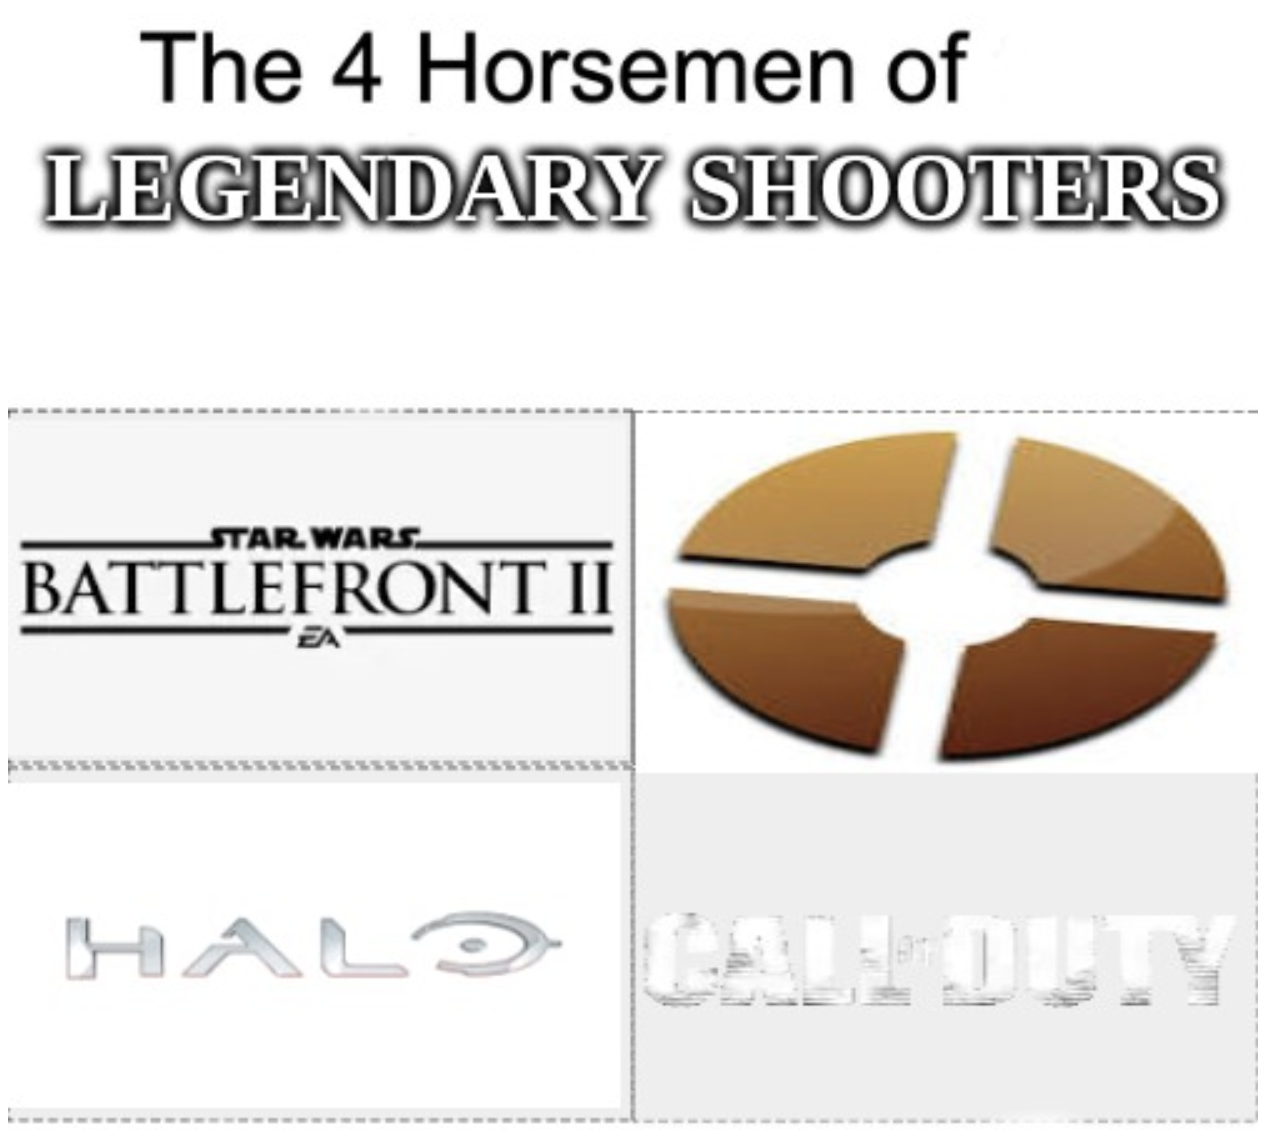 gaming memes - diagram - The 4 Horsemen of Legendary Shooters Star Wars Battlefront Ii Hald Fallouty